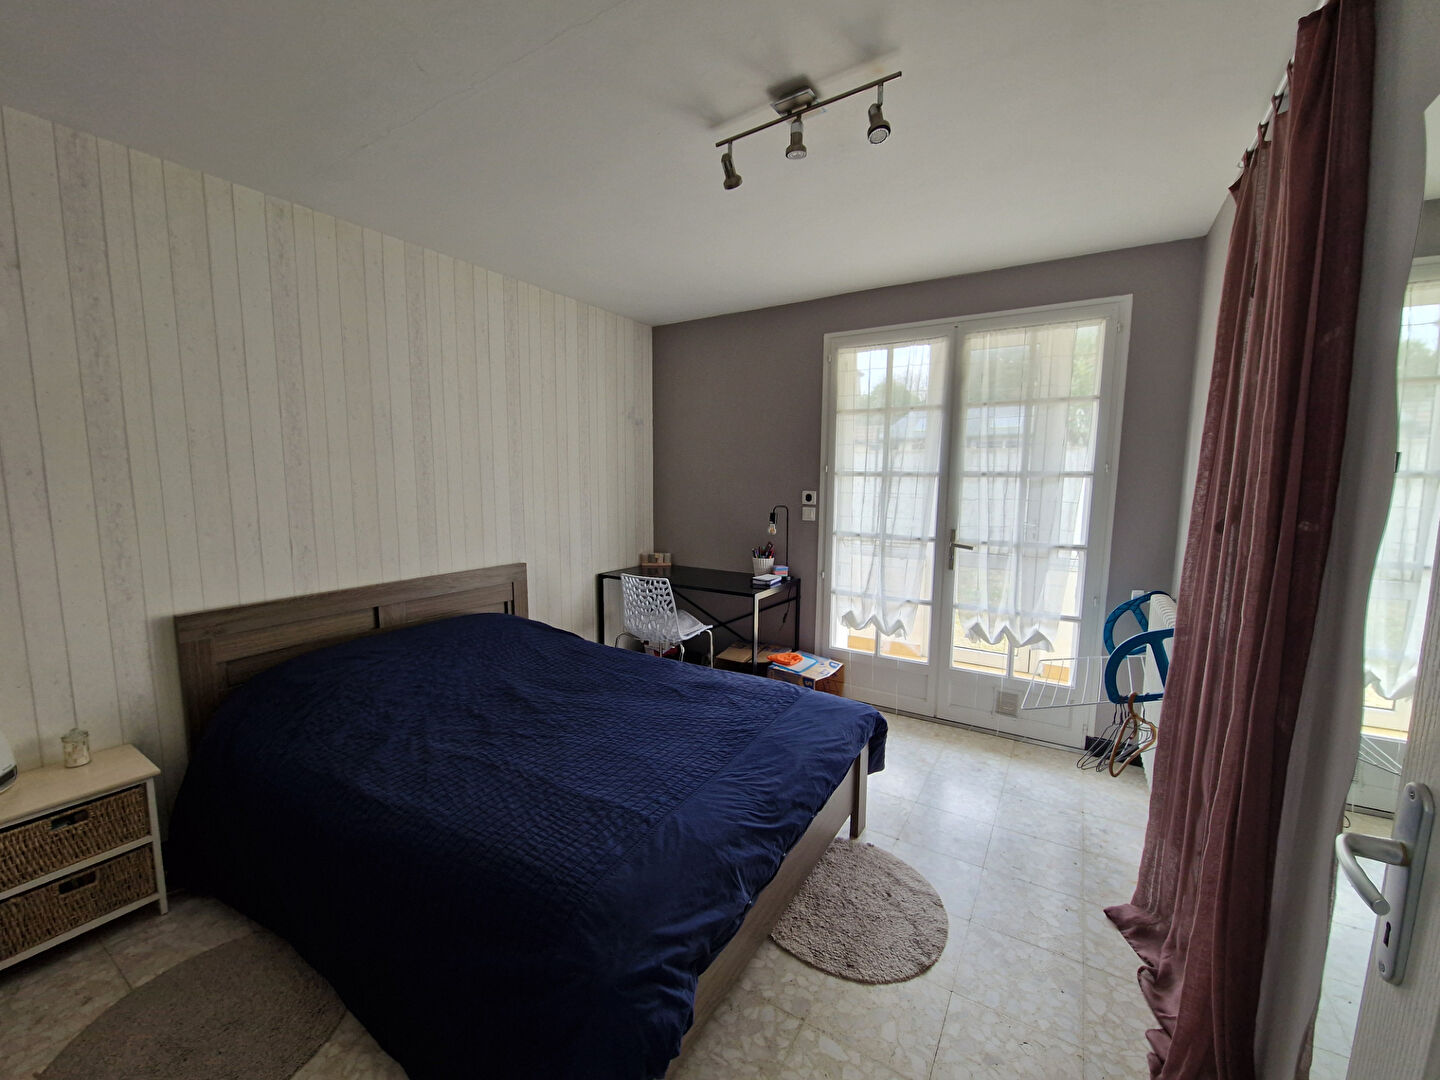 Appartement 3 pièces - 68 m² environ - 46963067h.jpg | Kermarrec Habitation